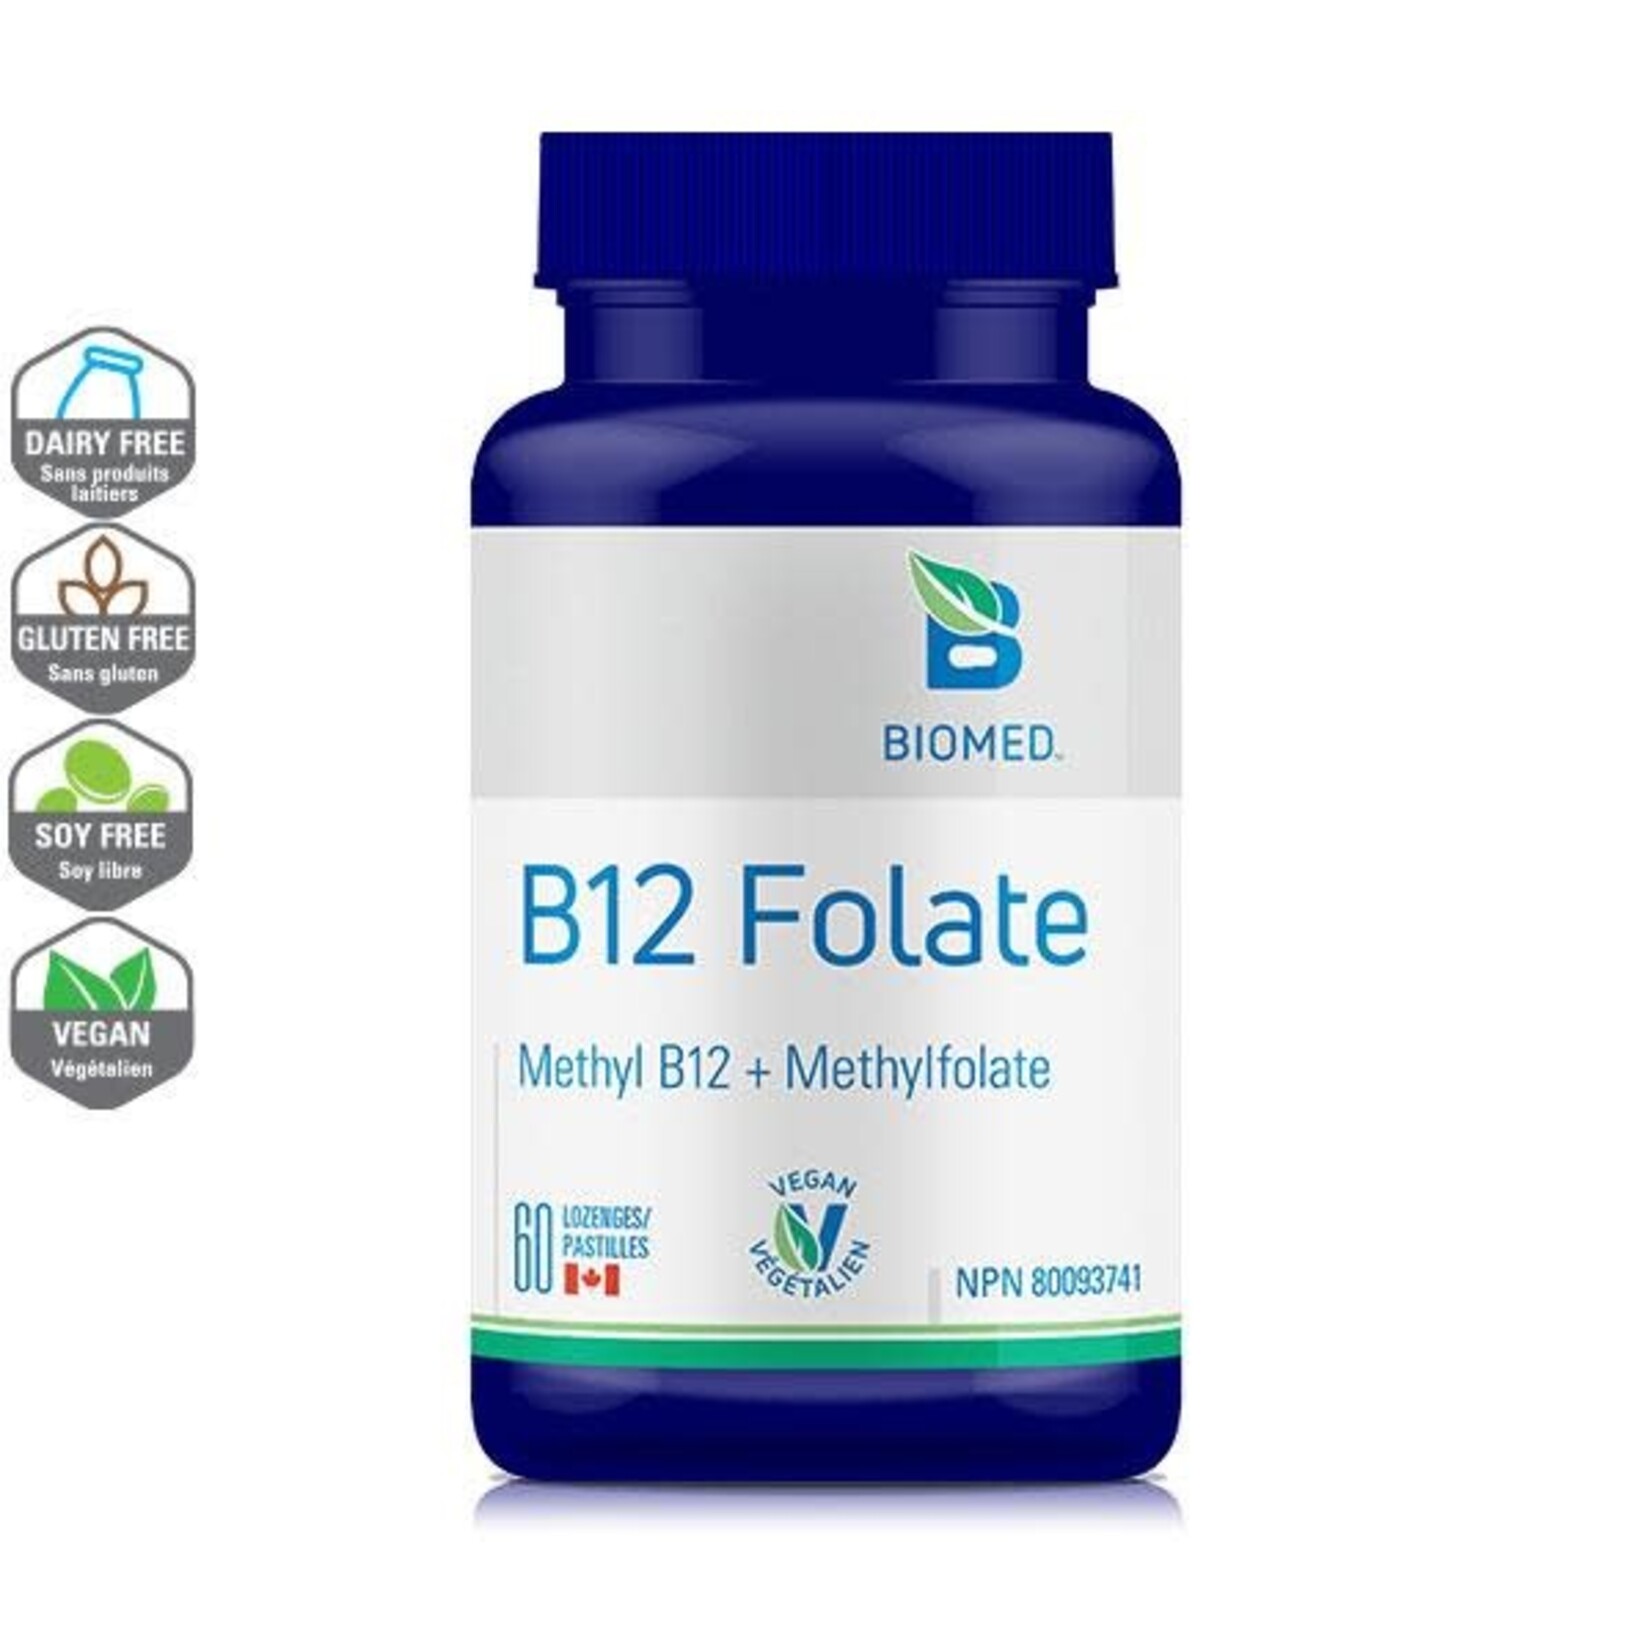 BIO MED BIO MED B12 FOLATE (METHYL B12 + METHYLFOLATE) 60 LOZENGES